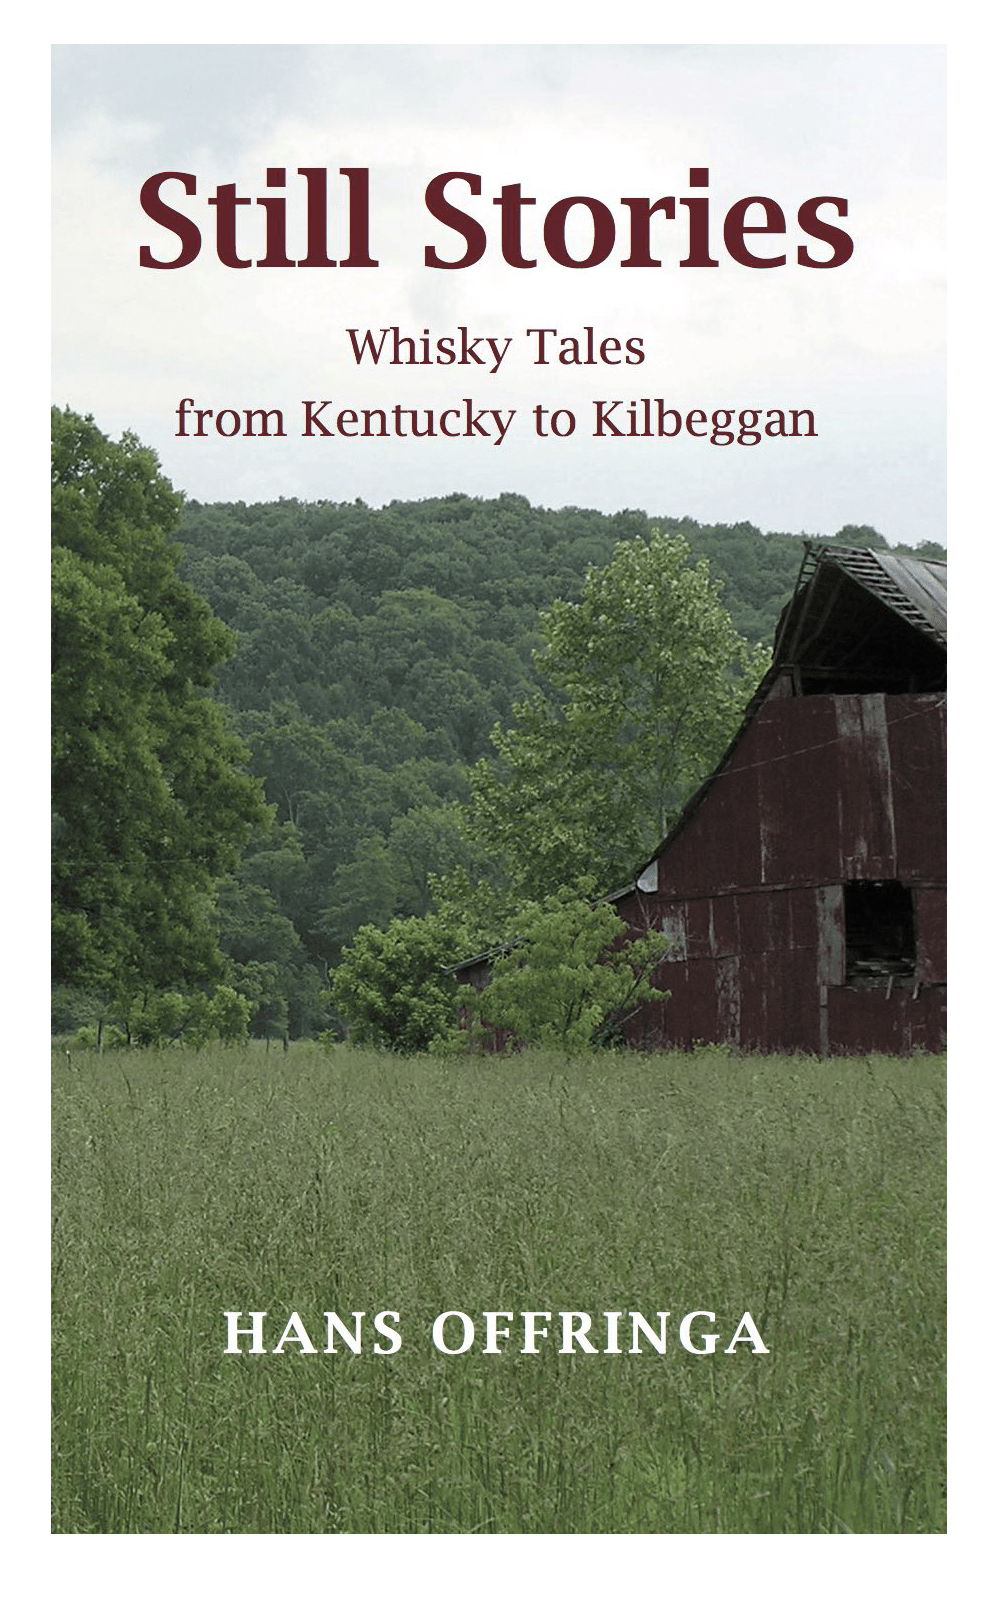 Still Stories – Whisky Tales from Kentucky to Kilbeggan